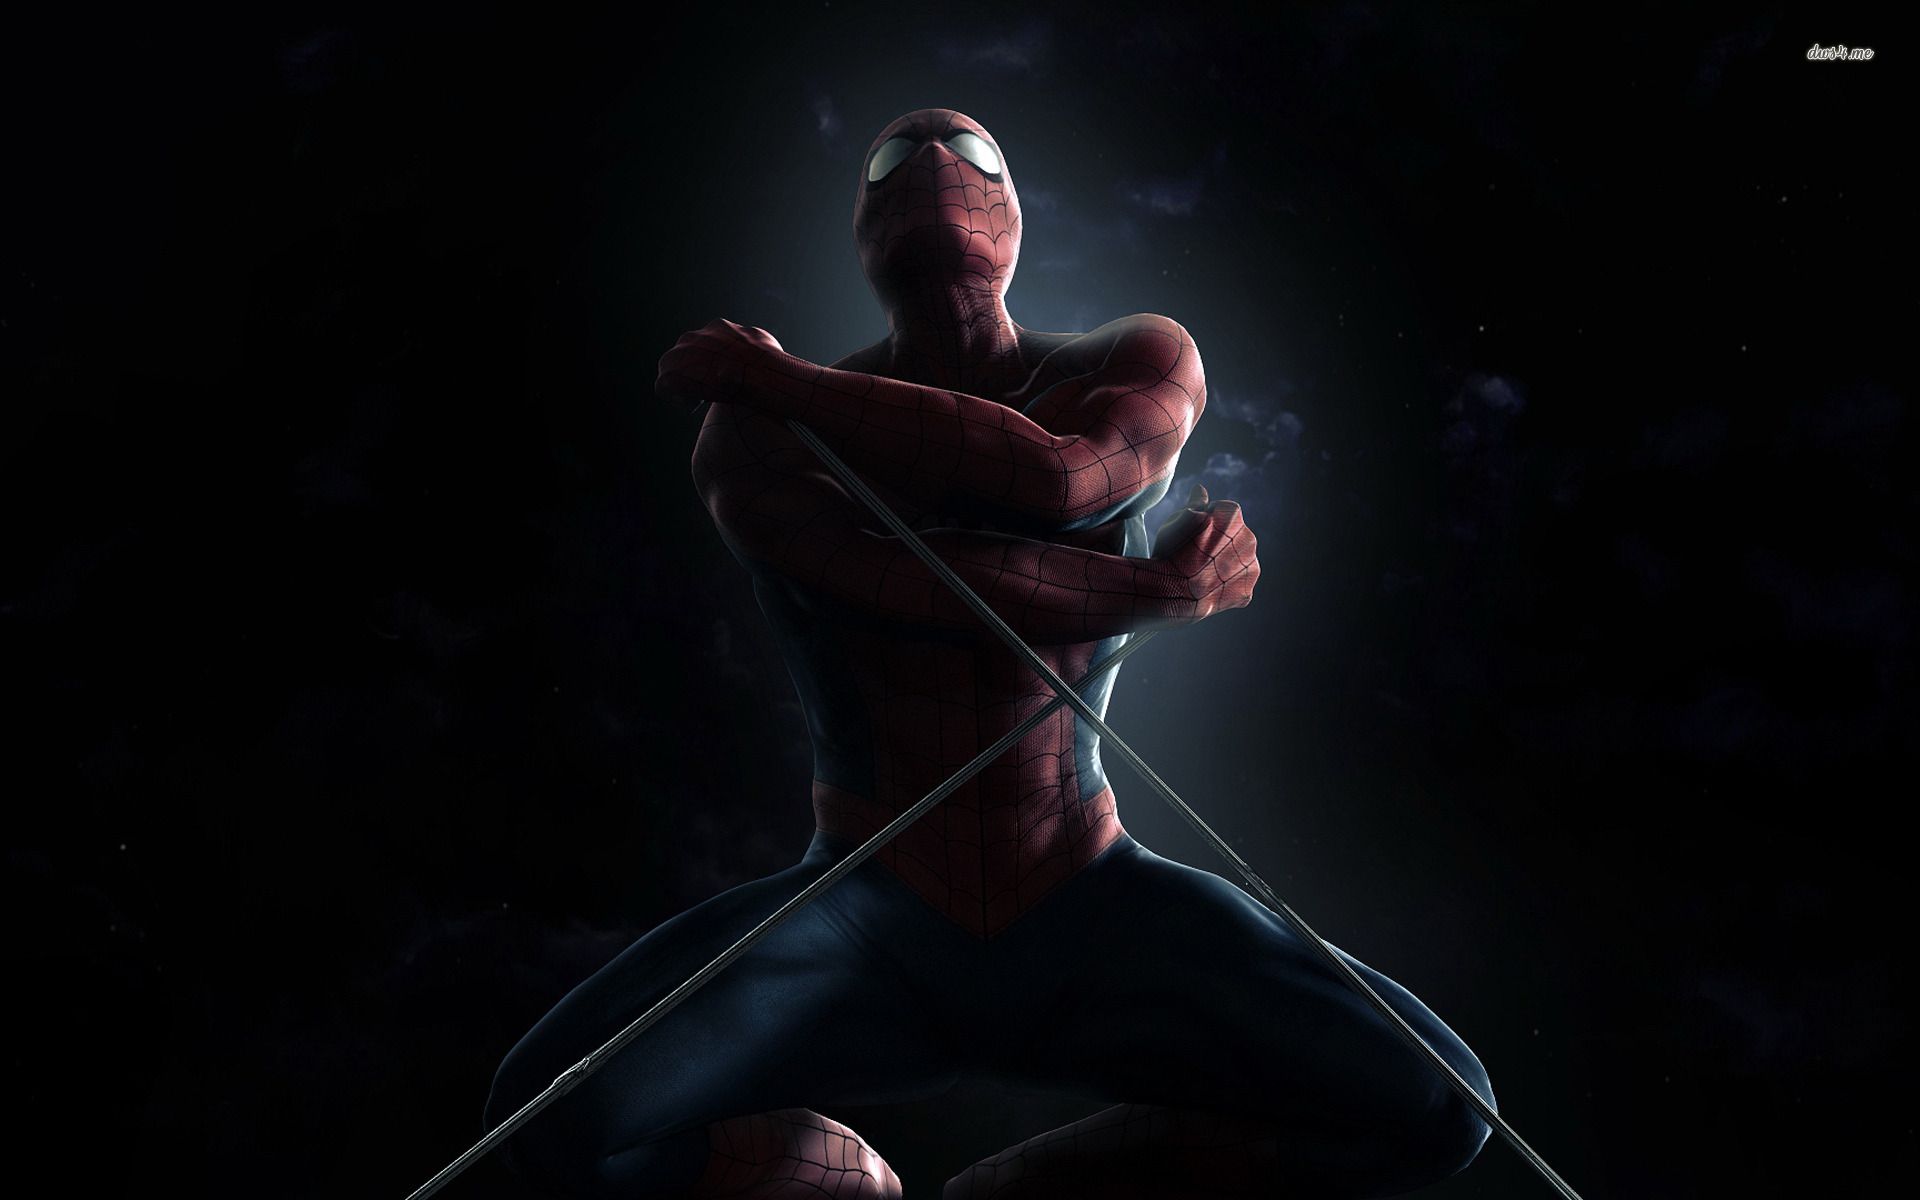 Spiderman #389183 | Full HD Widescreen wallpapers for desktop download